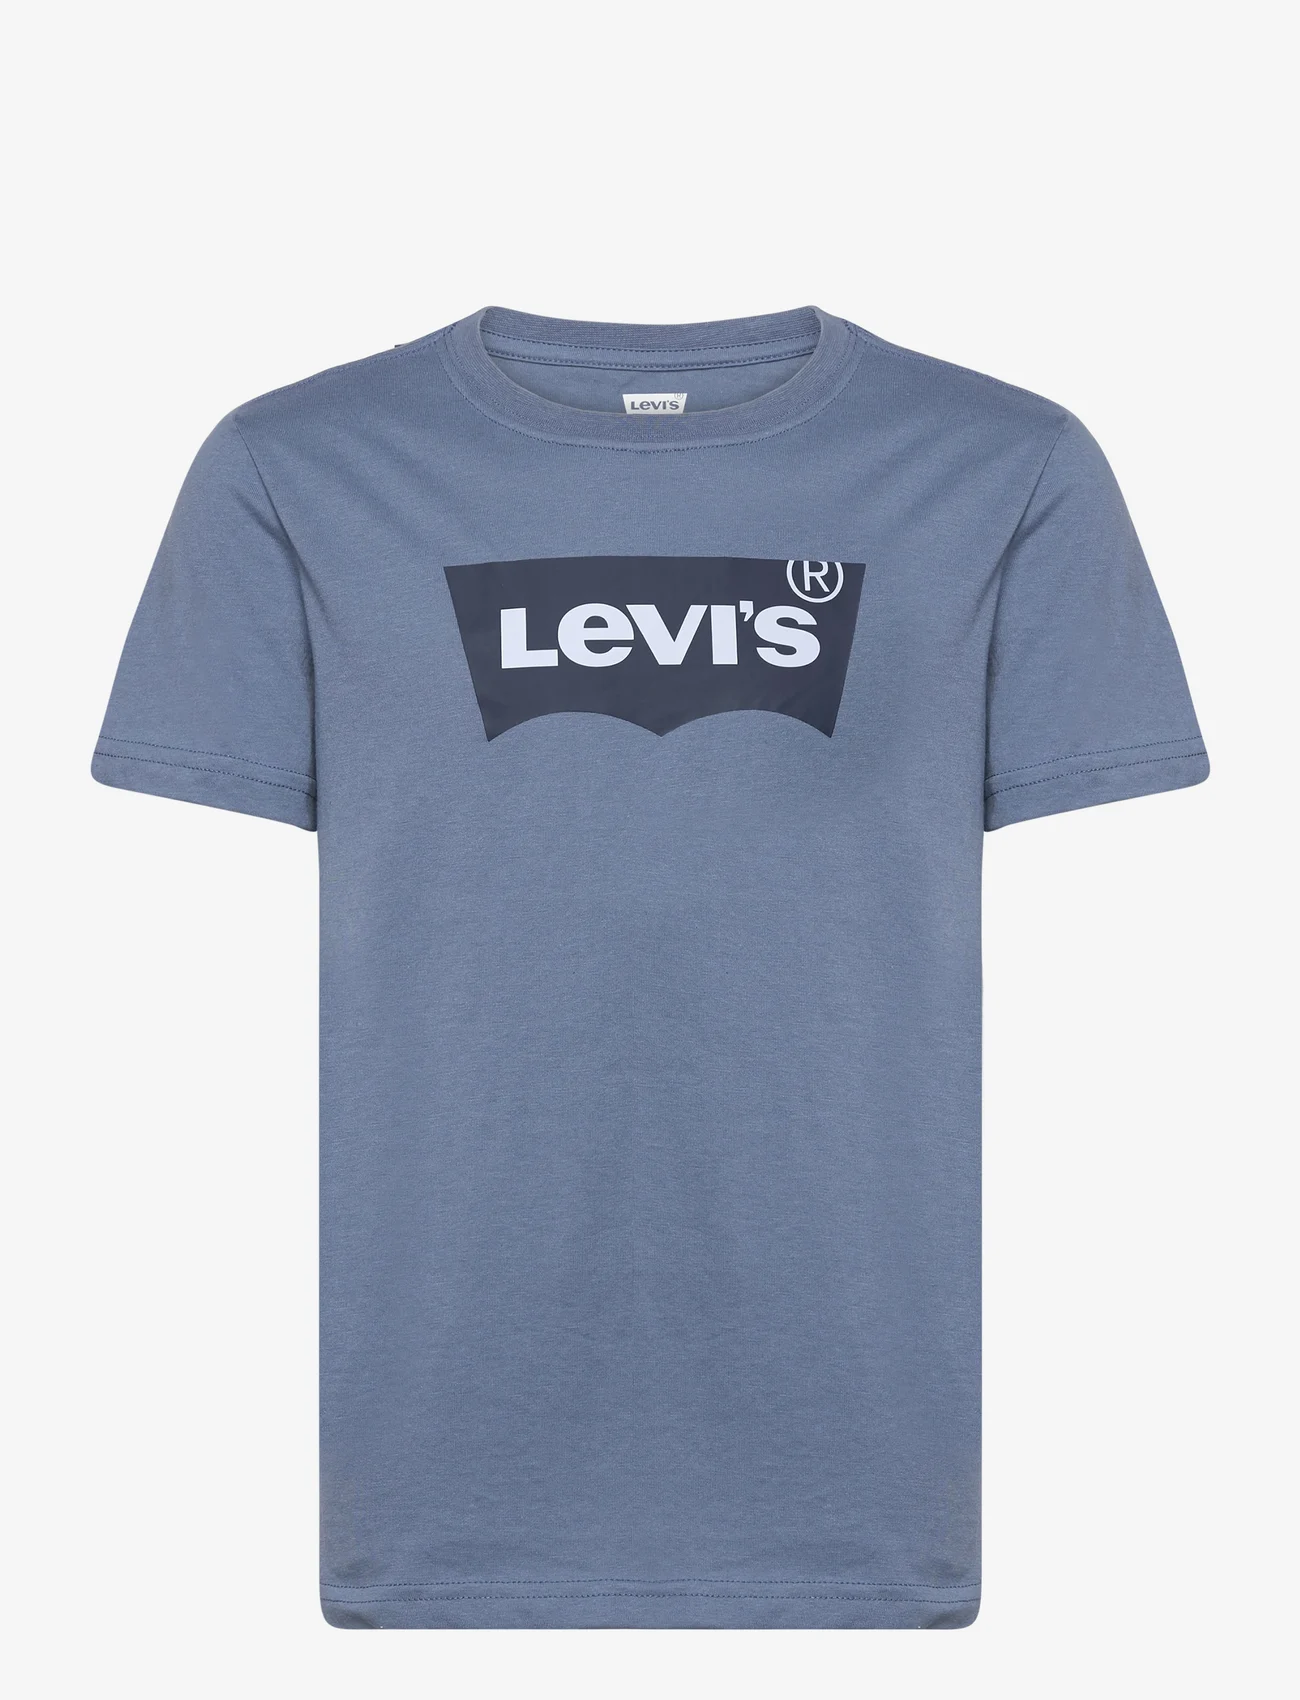 Levi's - Levi's® Batwing Tee - kurzärmelige - blue - 0